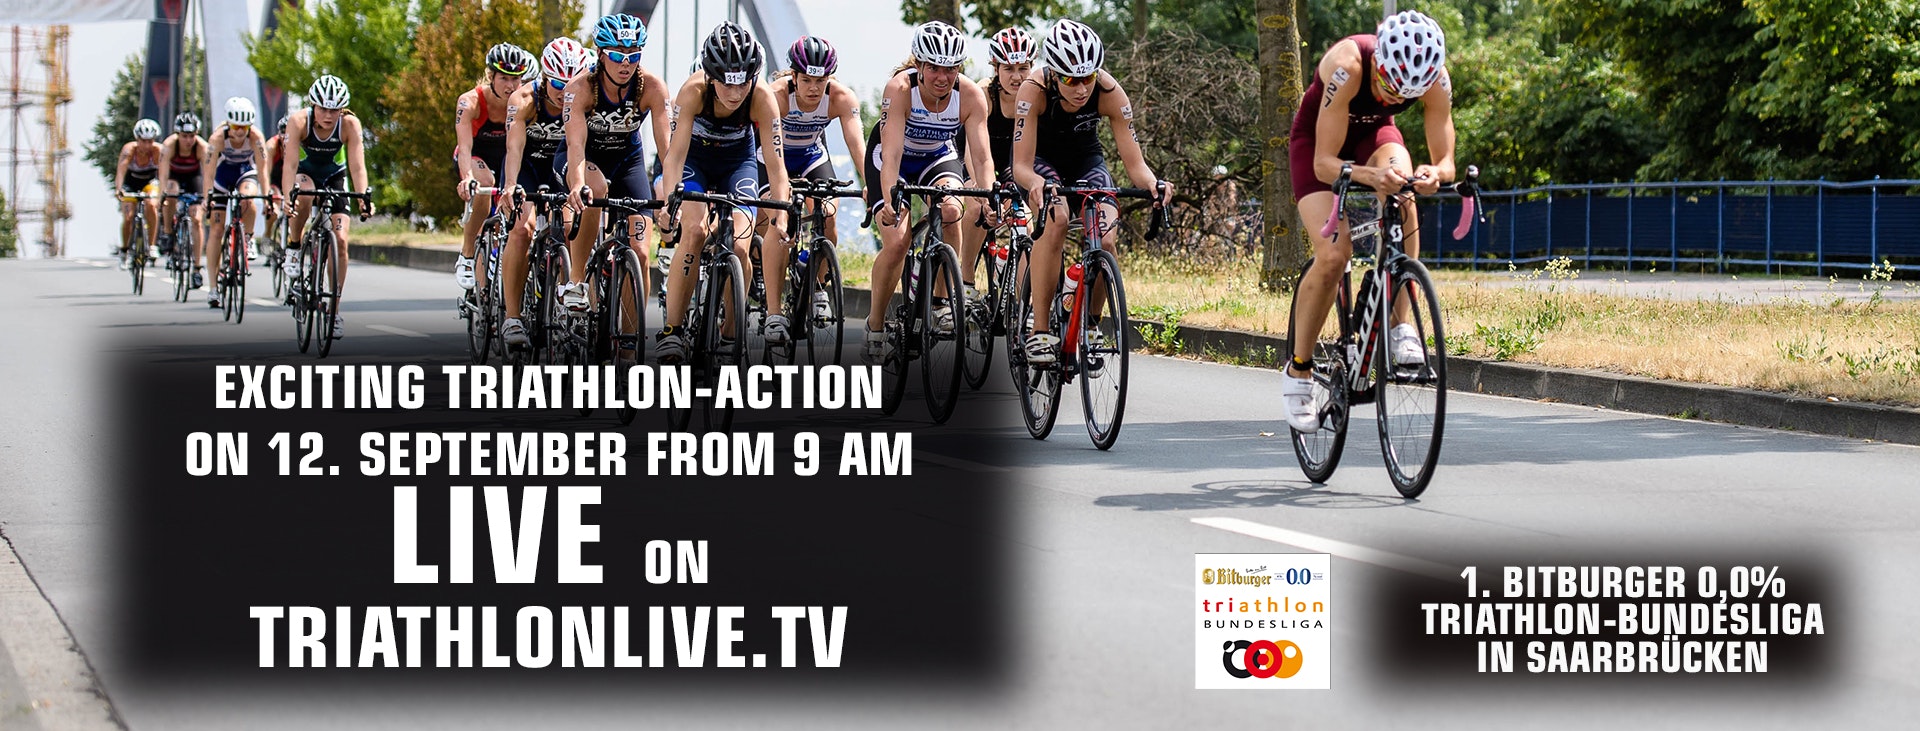 triathlon live tv free